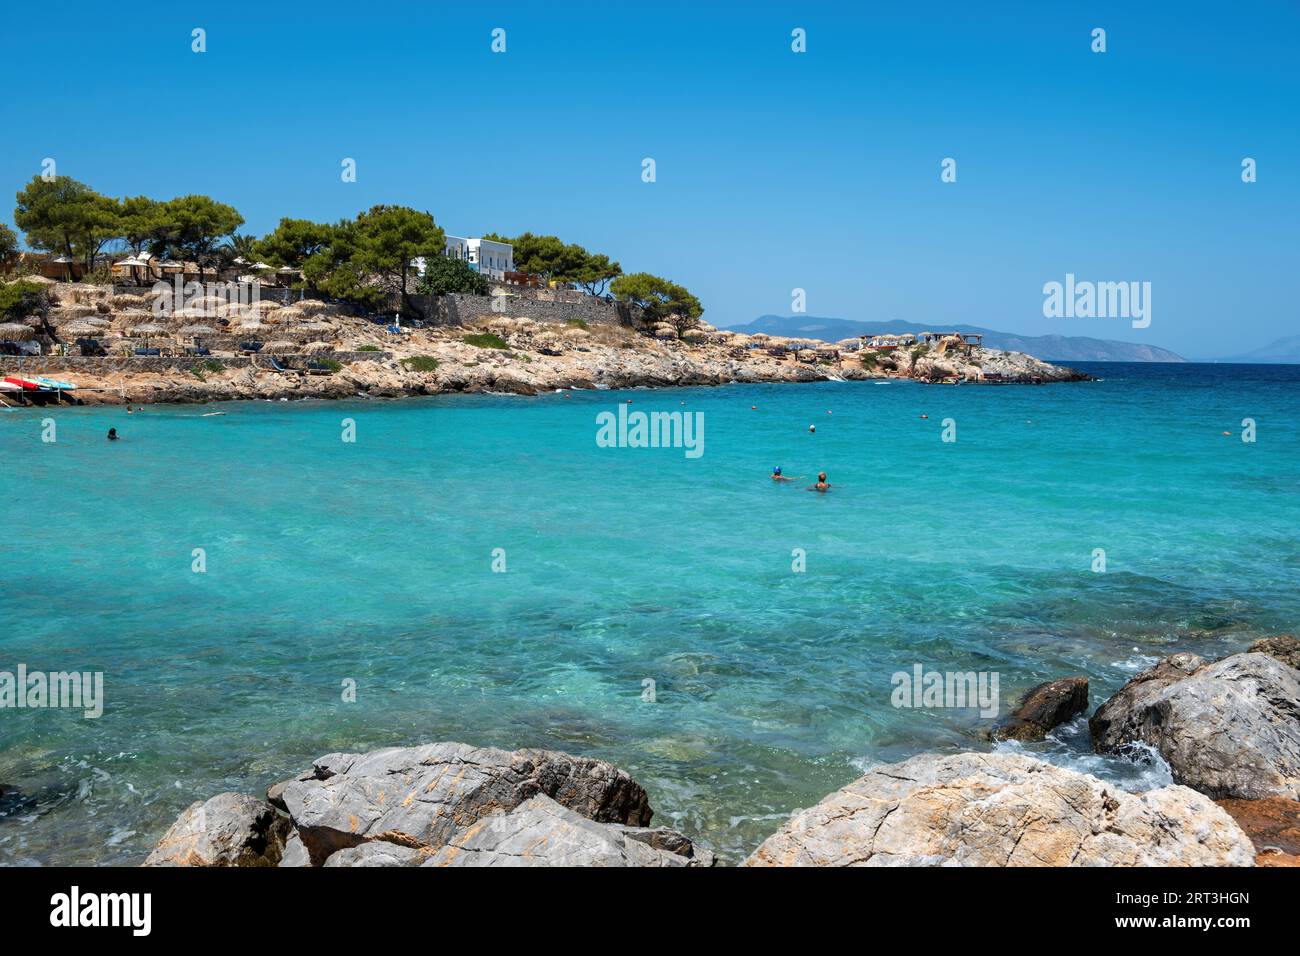 Greece Aponisos beach, destination Agistri island. Rocky beach with pine tree and umbrella, people swim in turquoise sea water, blue sky, sunny day. Stock Photo